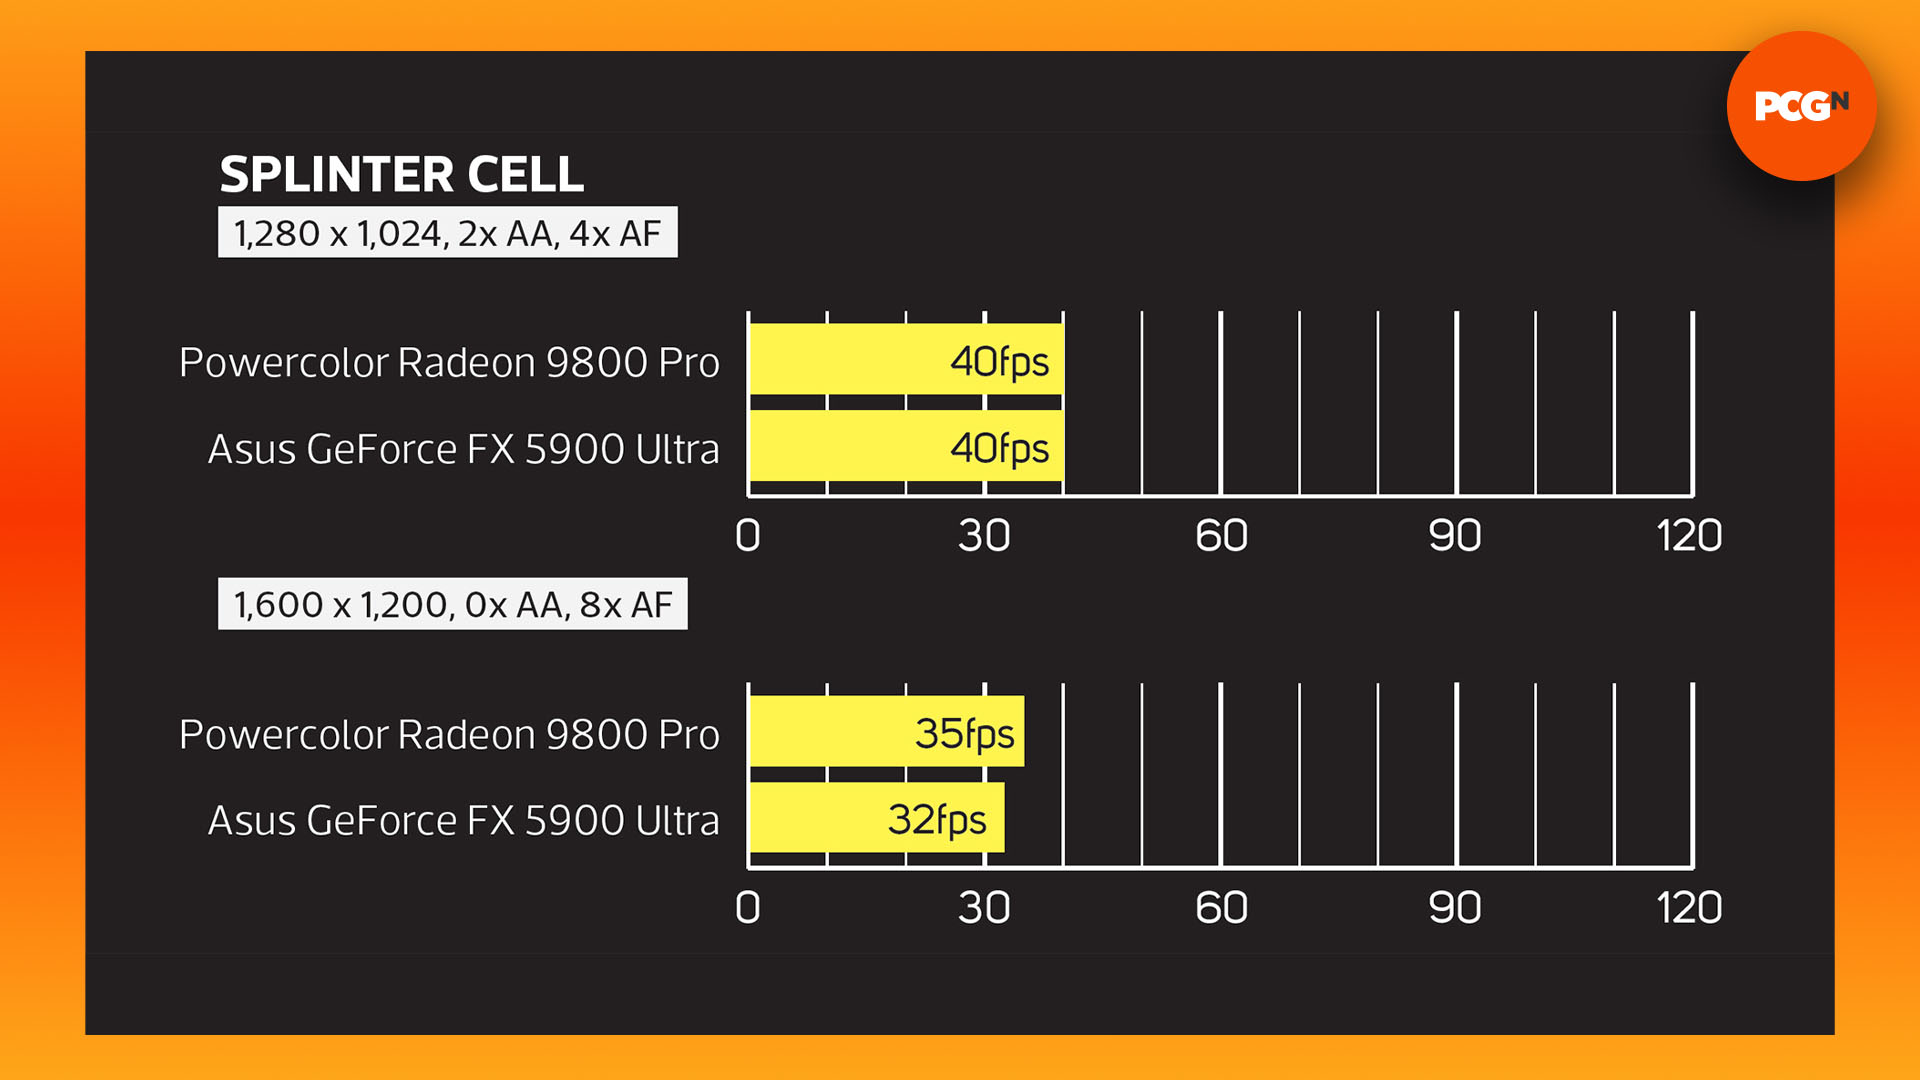 Nvidia GeForce FX 5900 Ultra: Splinter Cell benchmark graphs